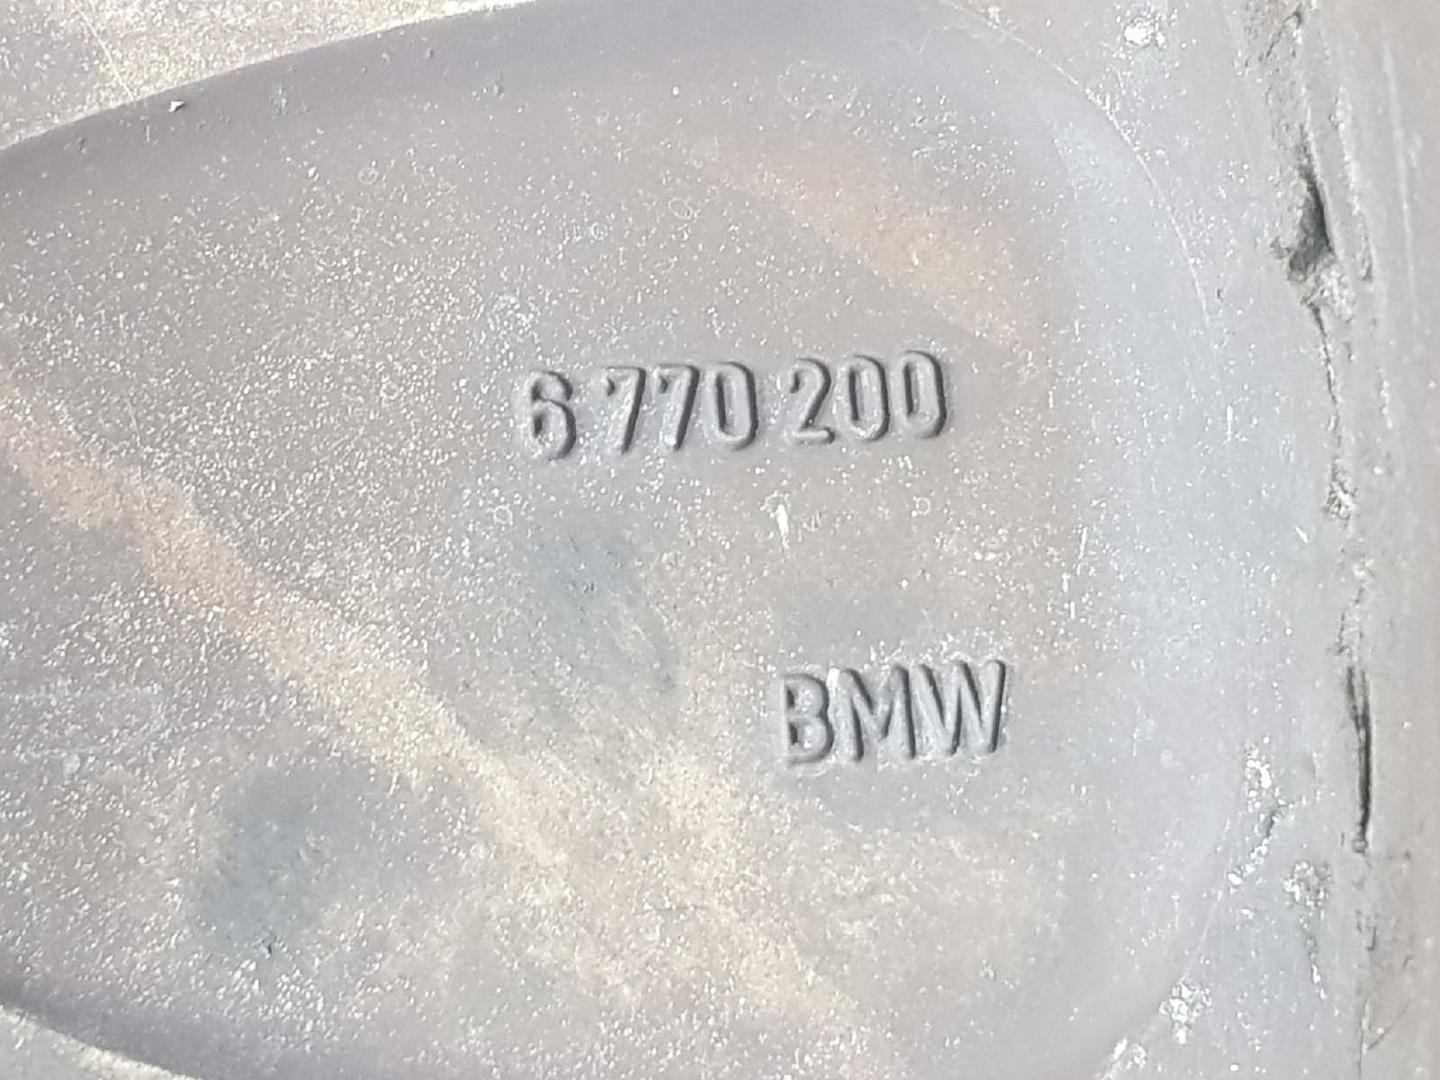 BMW X6 E71/E72 (2008-2012) Шина 6770200, 36116770200 19747079